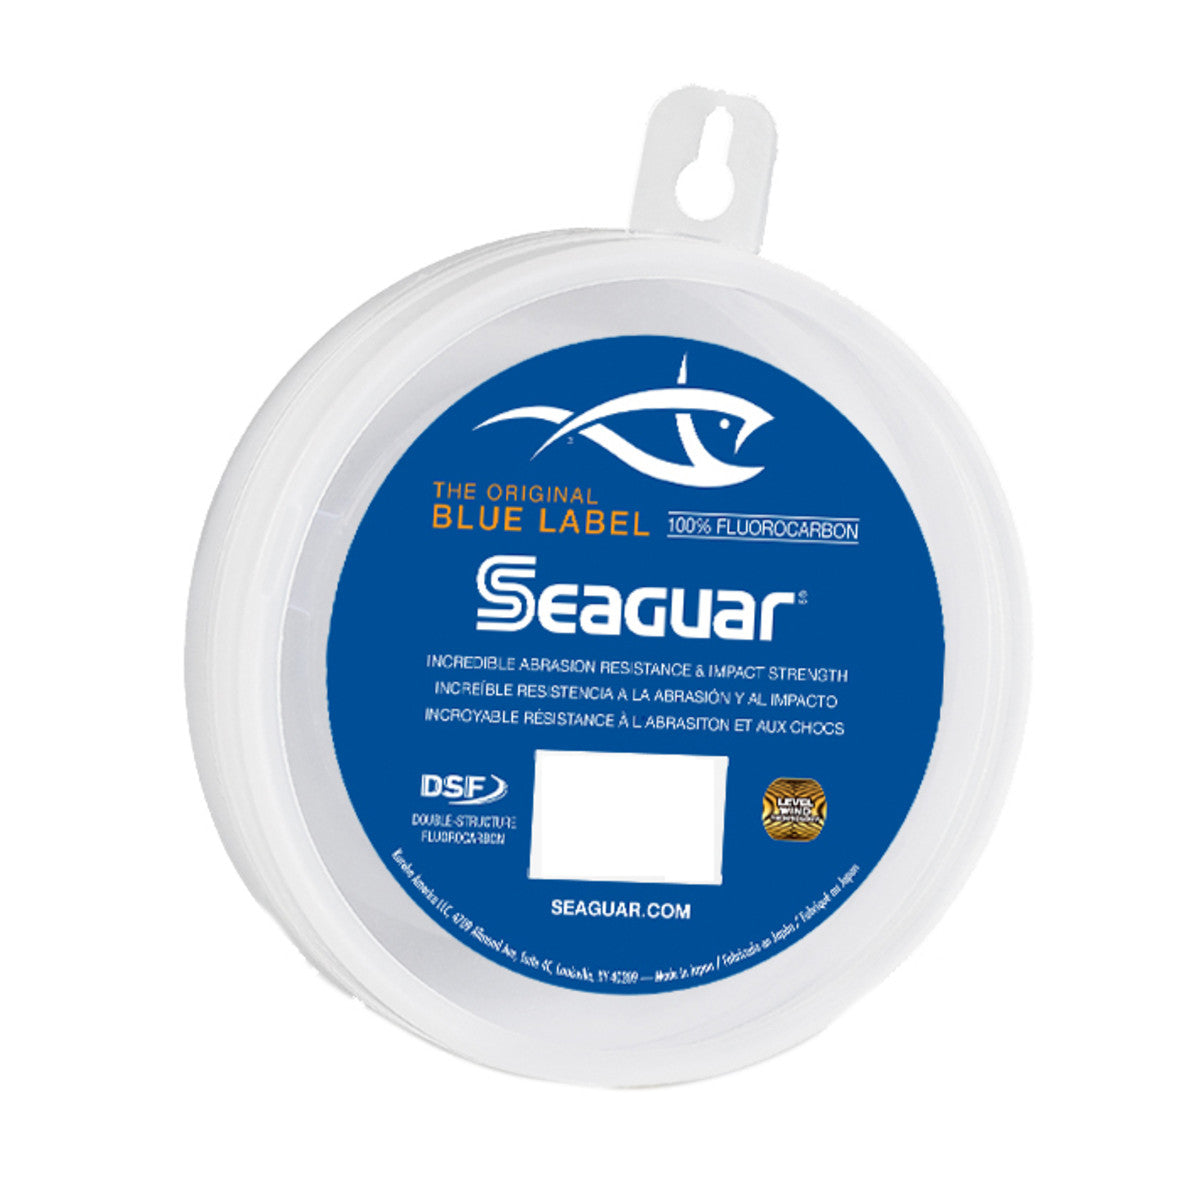 Seaguar Fluorocarbon Leader Material  Blue Label & STS Trout Steelhead 25YD - 100YD